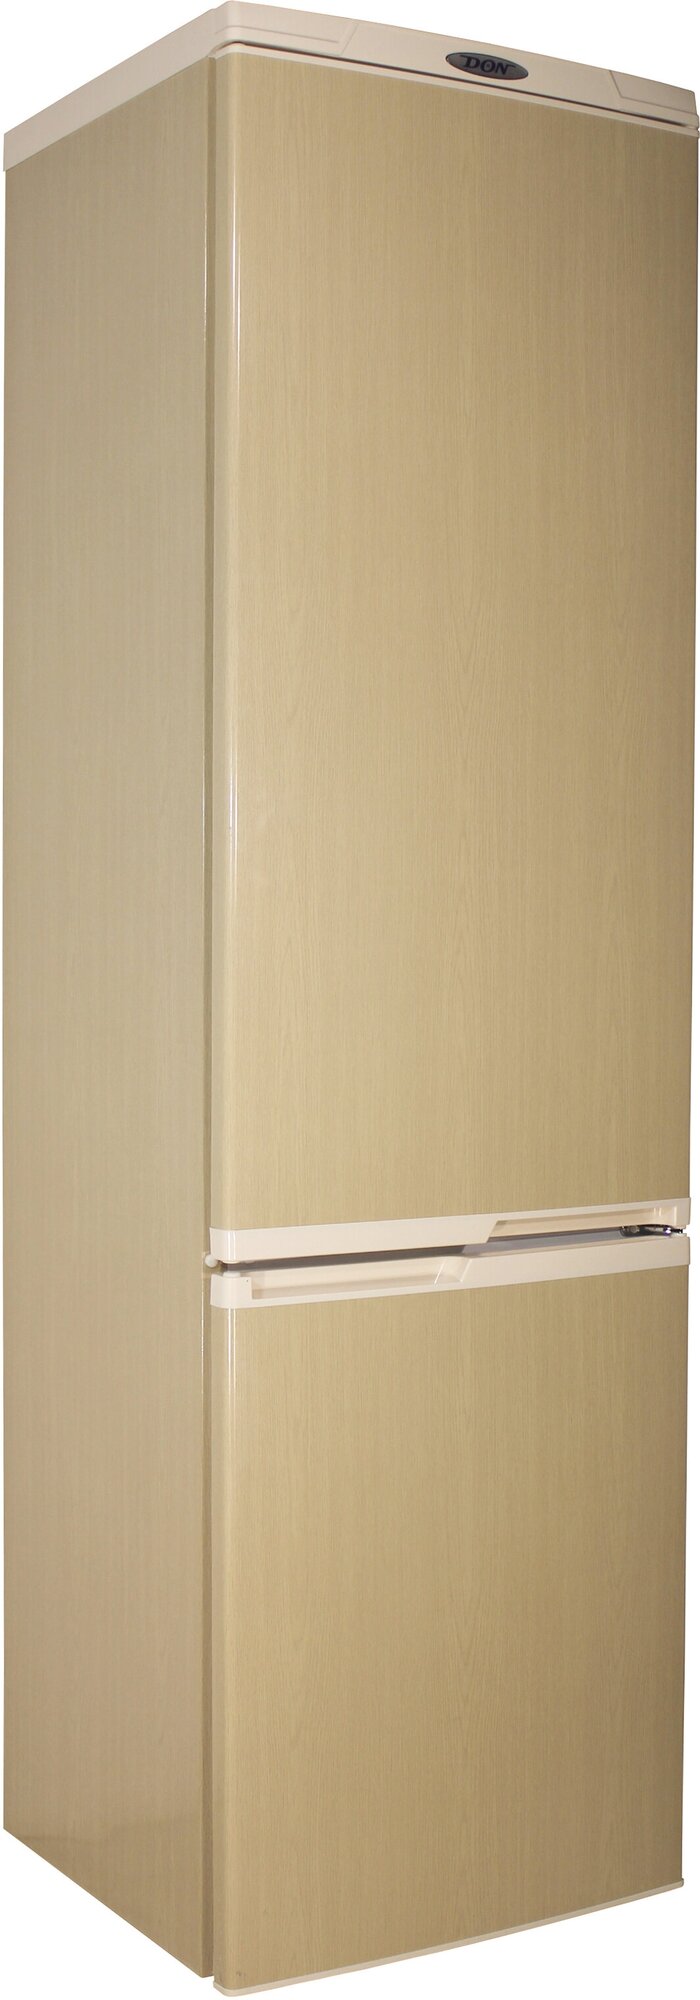 Двухкамерный холодильник DON - фото №6